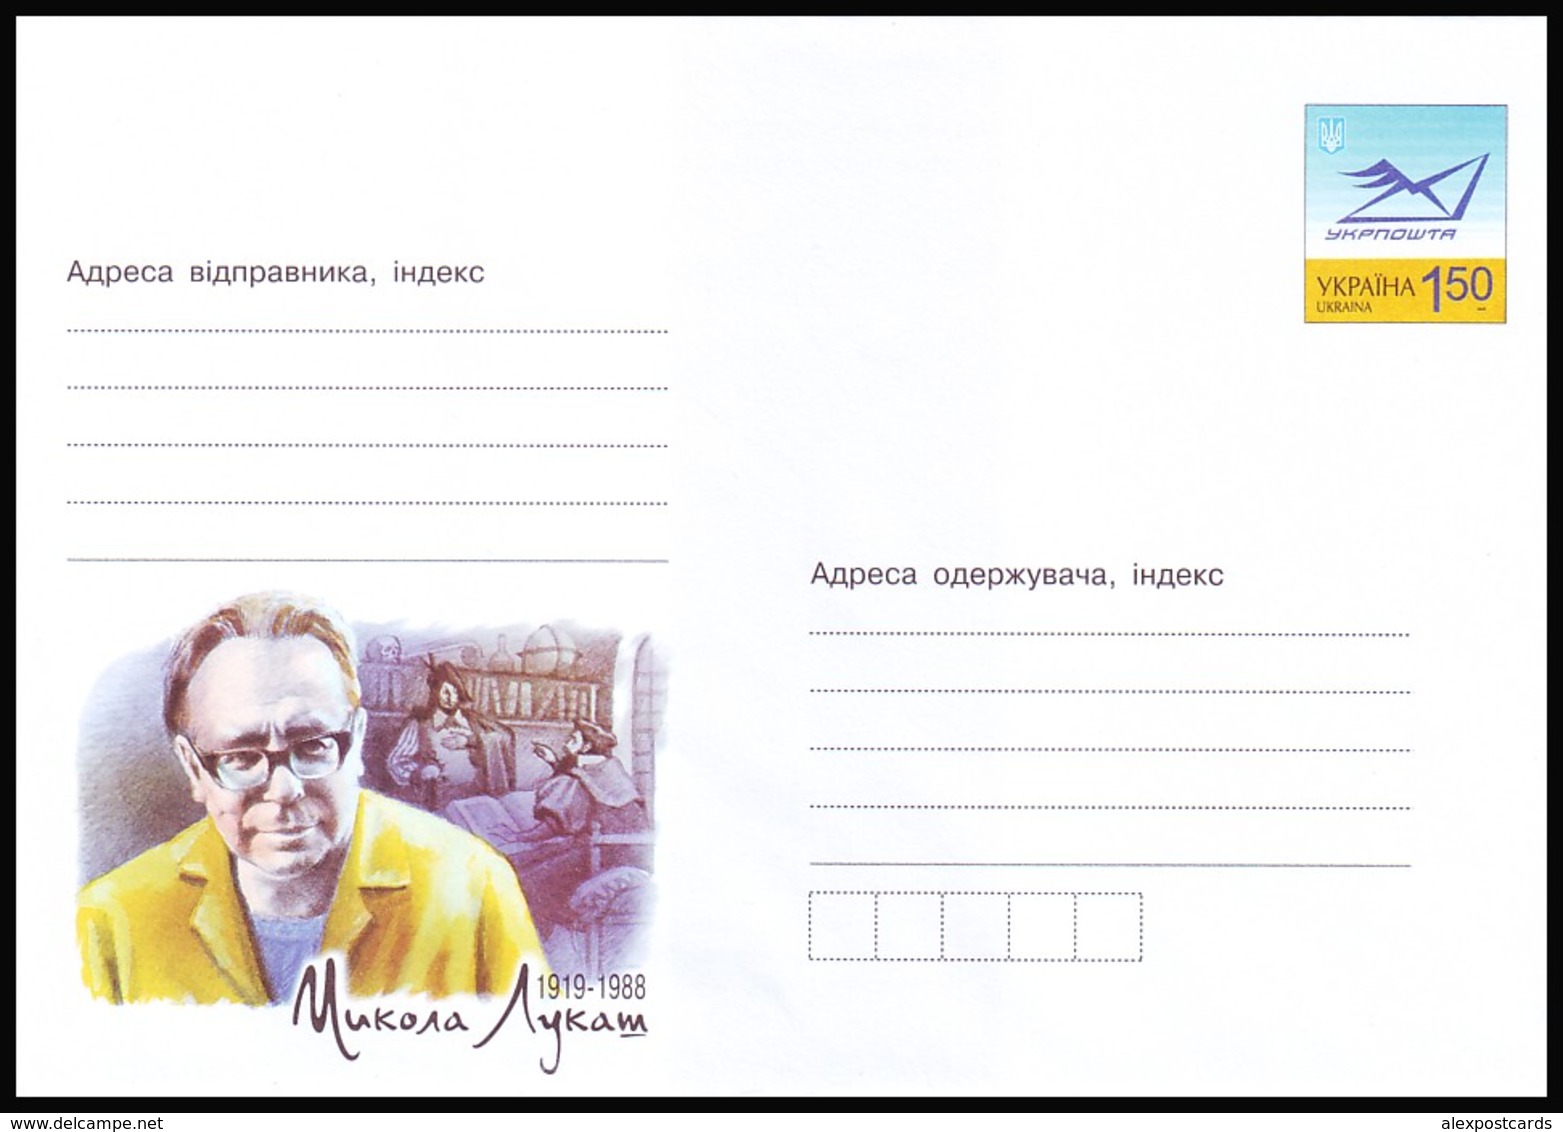 UKRAINE 2009. (9-3567). MYKOLA LUKASH - TRANSLATOR, LINGUIST AND POLYGLOT. Postal Stationery Stamped Cover (**) - Ukraine